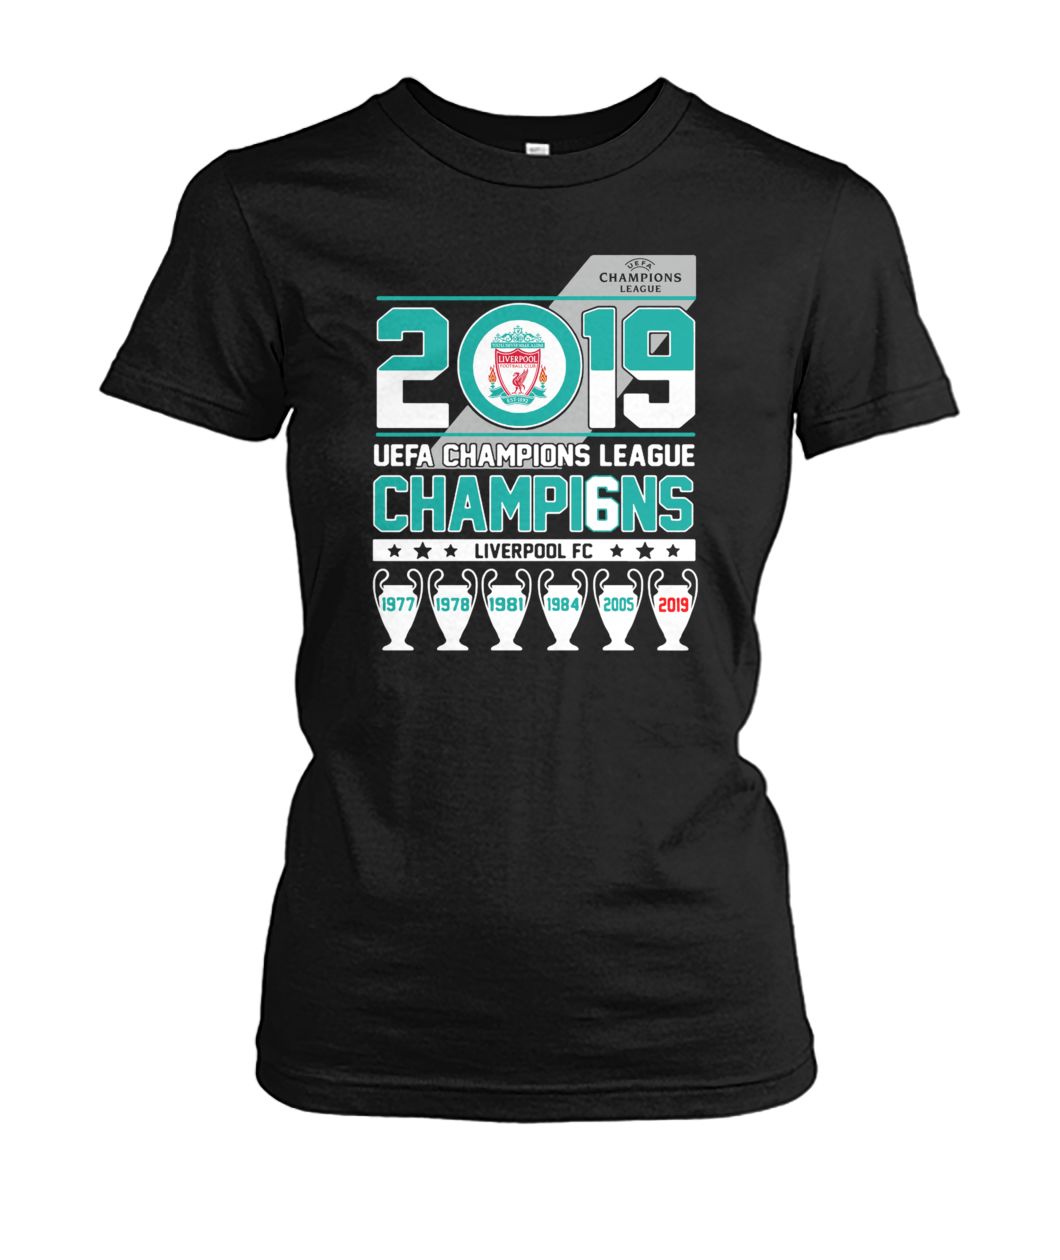 UEFA champions league 2019 champions liverpool fc women's crew tee